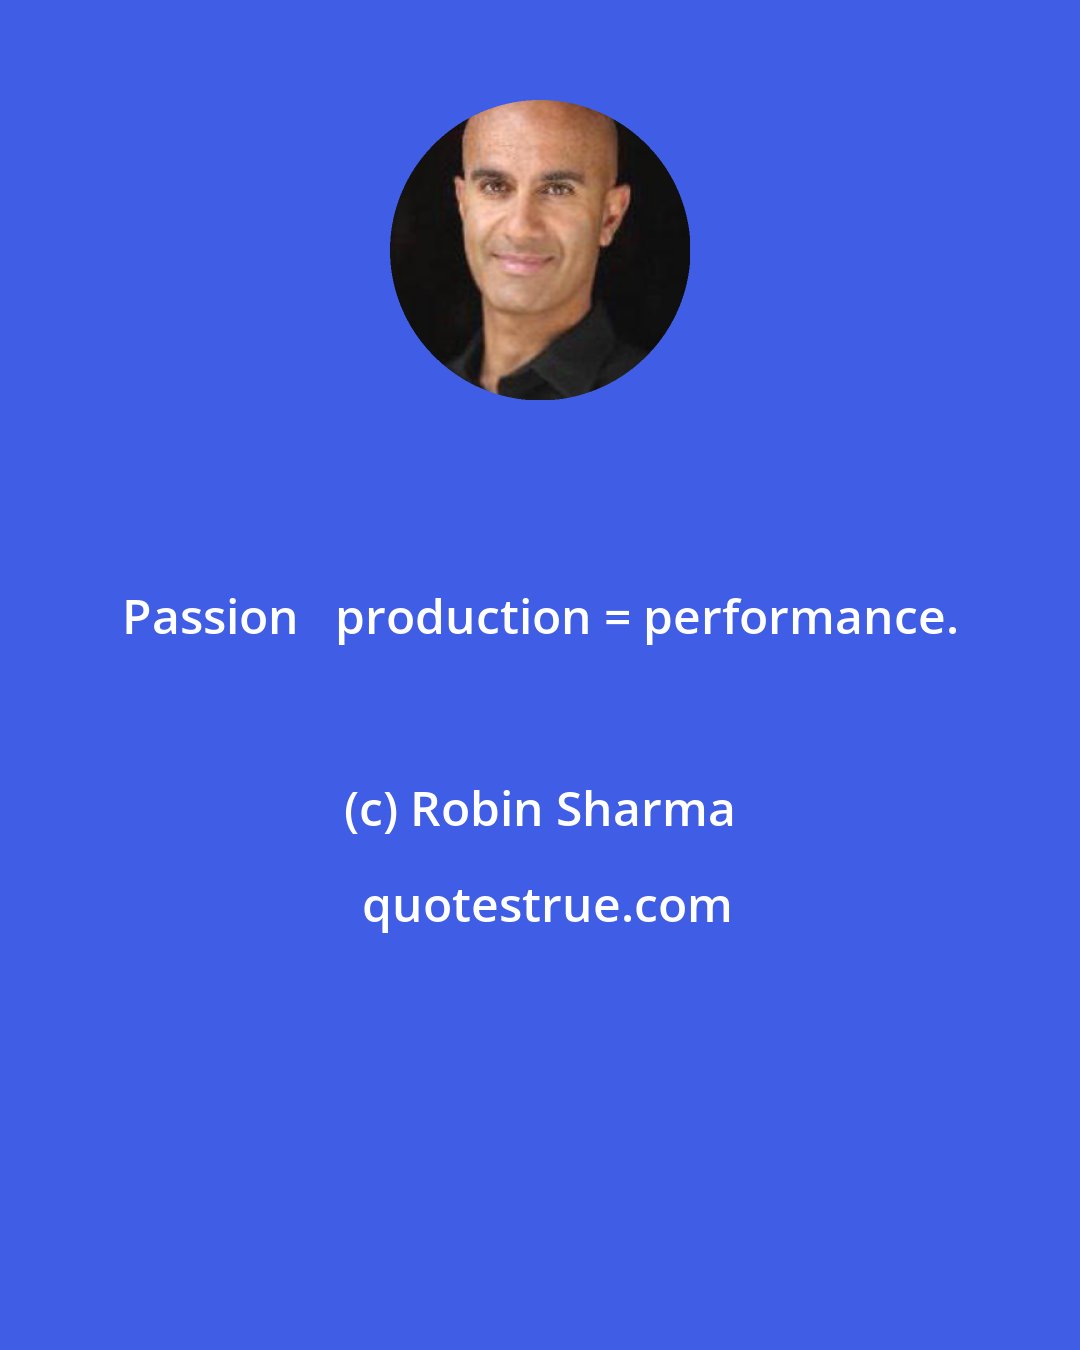 Robin Sharma: Passion + production = performance.